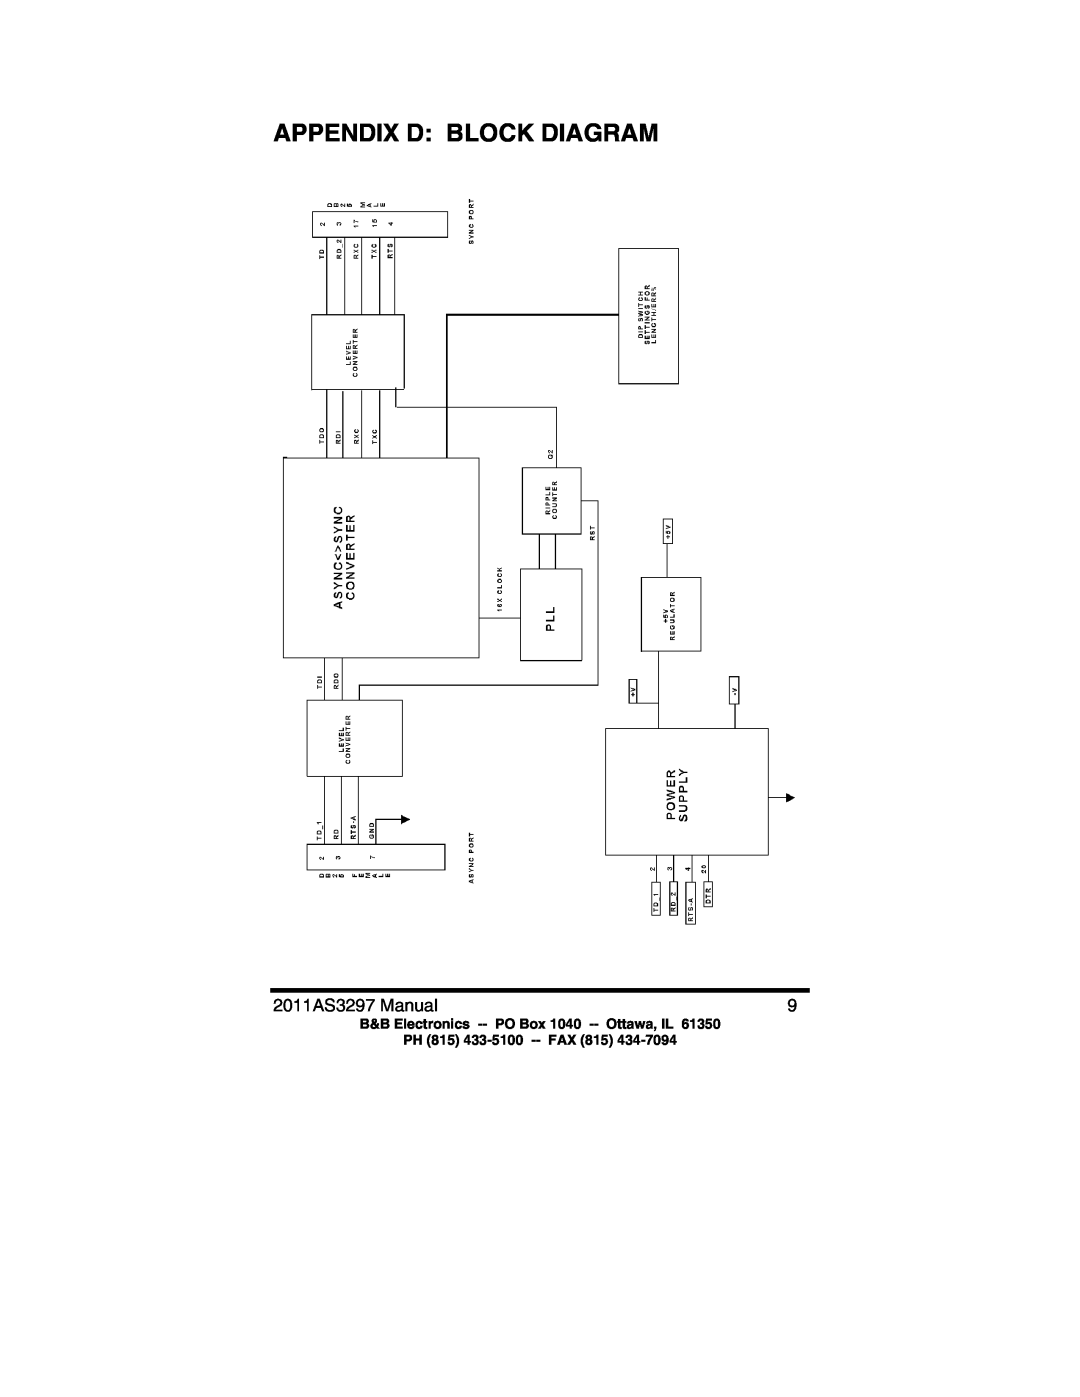 B&B Electronics manual Appendix D Block Diagram, 2011AS3297 Manual, B&B Electronics -- PO Box 1040 -- Ottawa, IL 